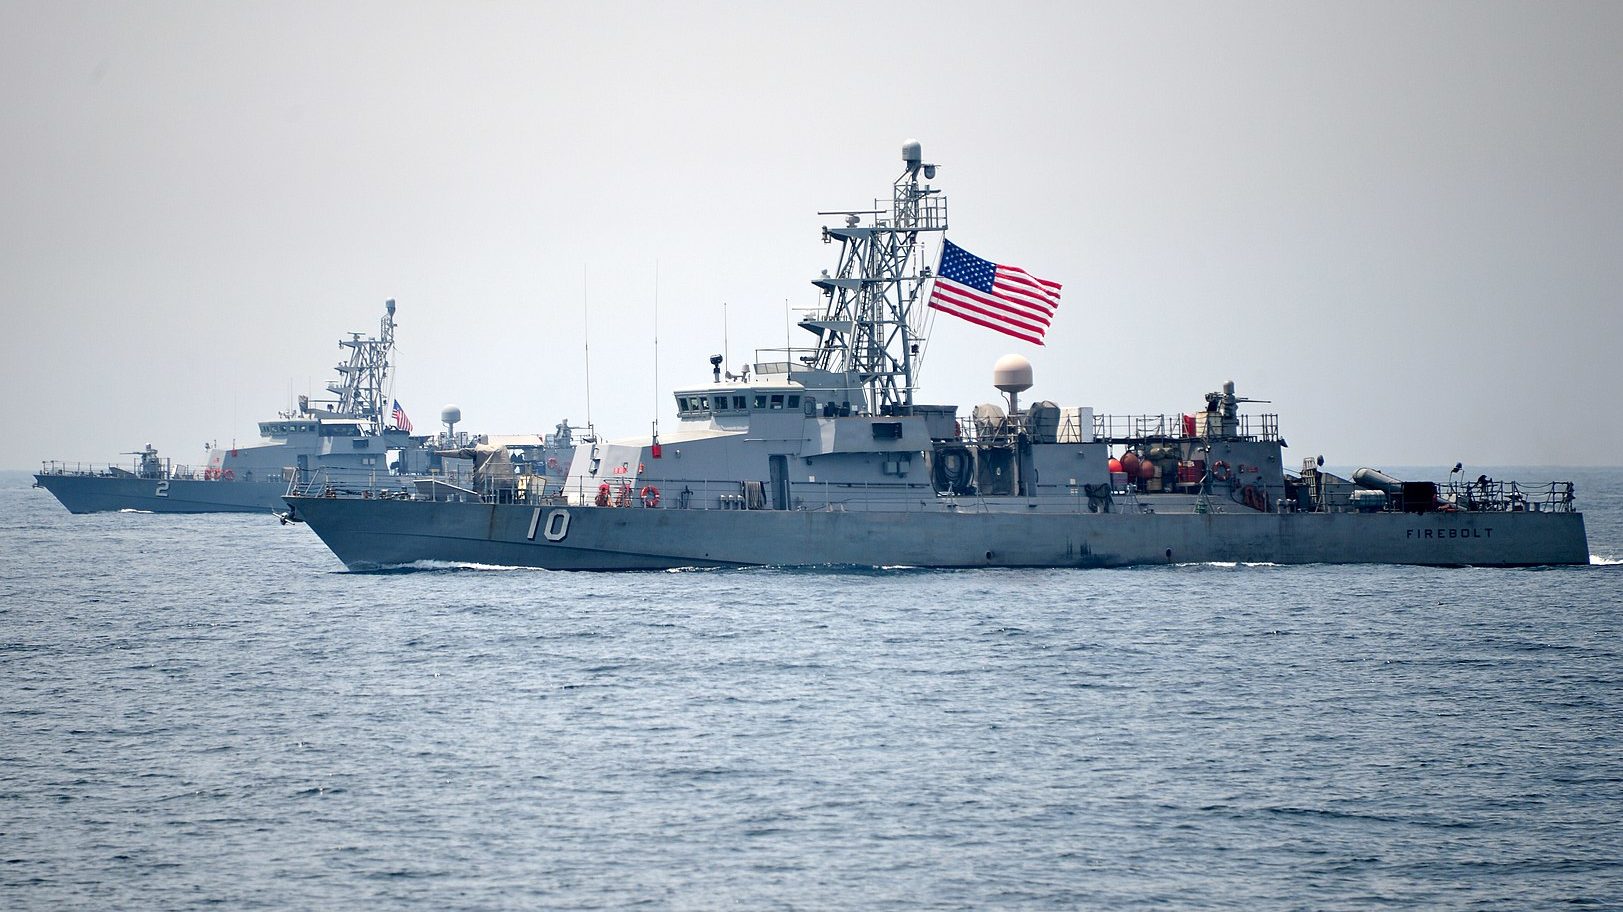 US Fires Warning Shots at Iranian Ships in Rare Gulf Clash  